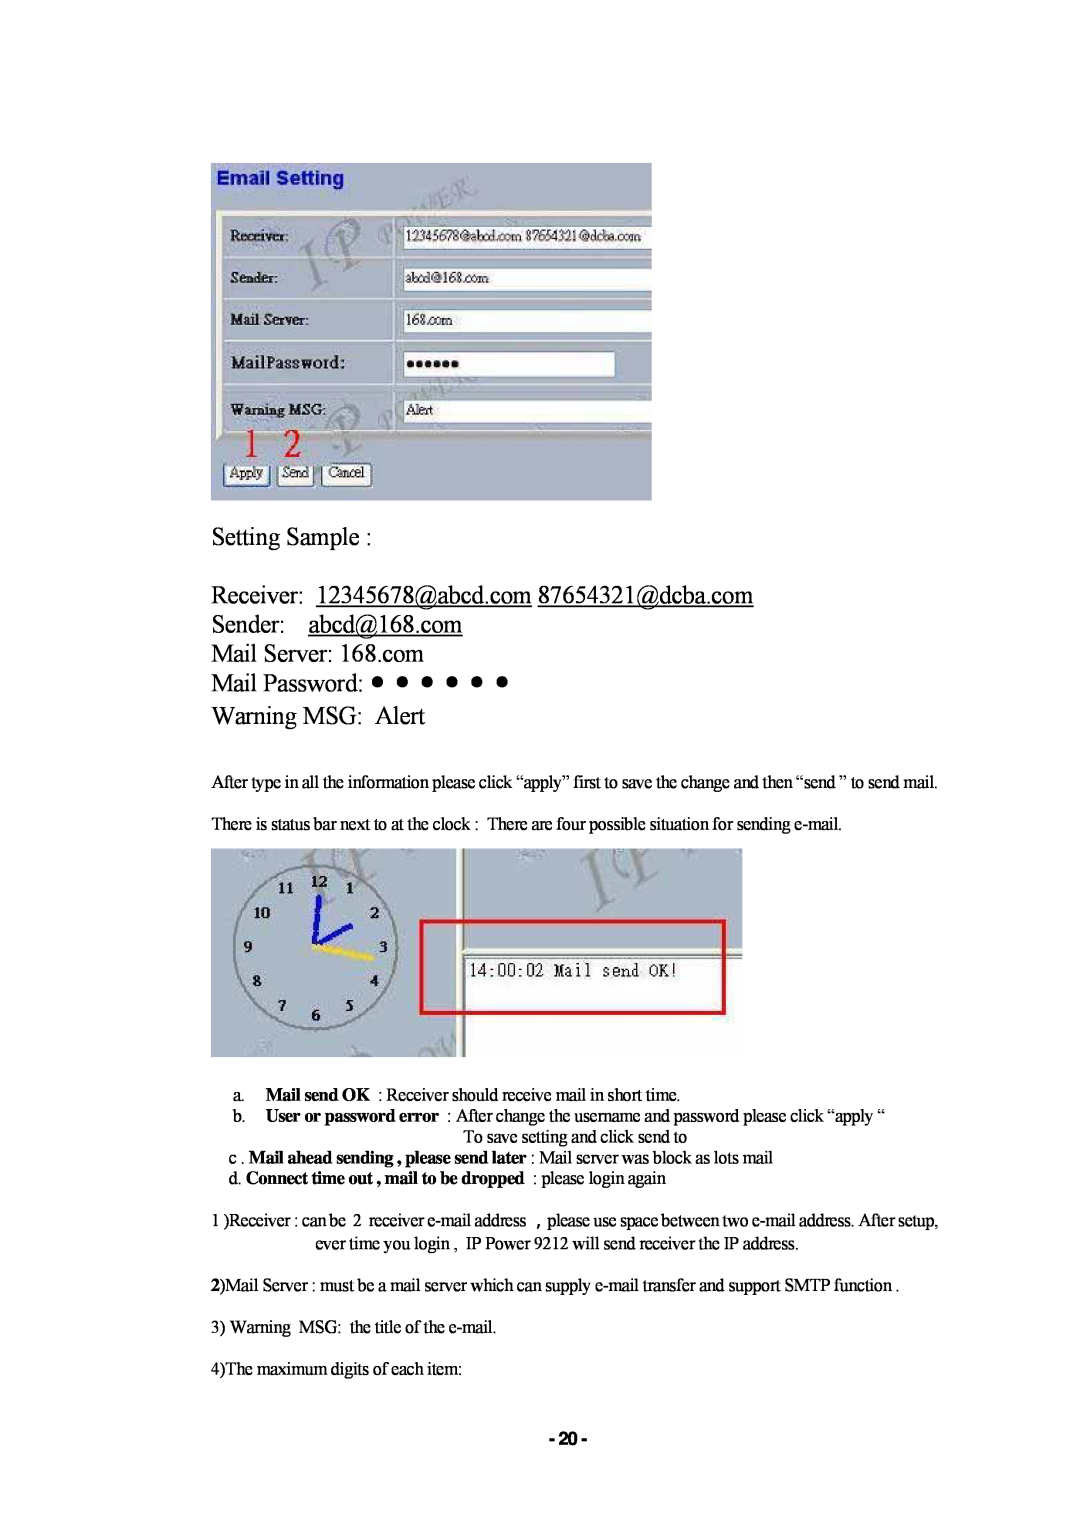 New Media Technology 9212 manual Setting Sample Receiver 12345678@abcd.com 87654321@dcba.com, Warning MSG Alert 